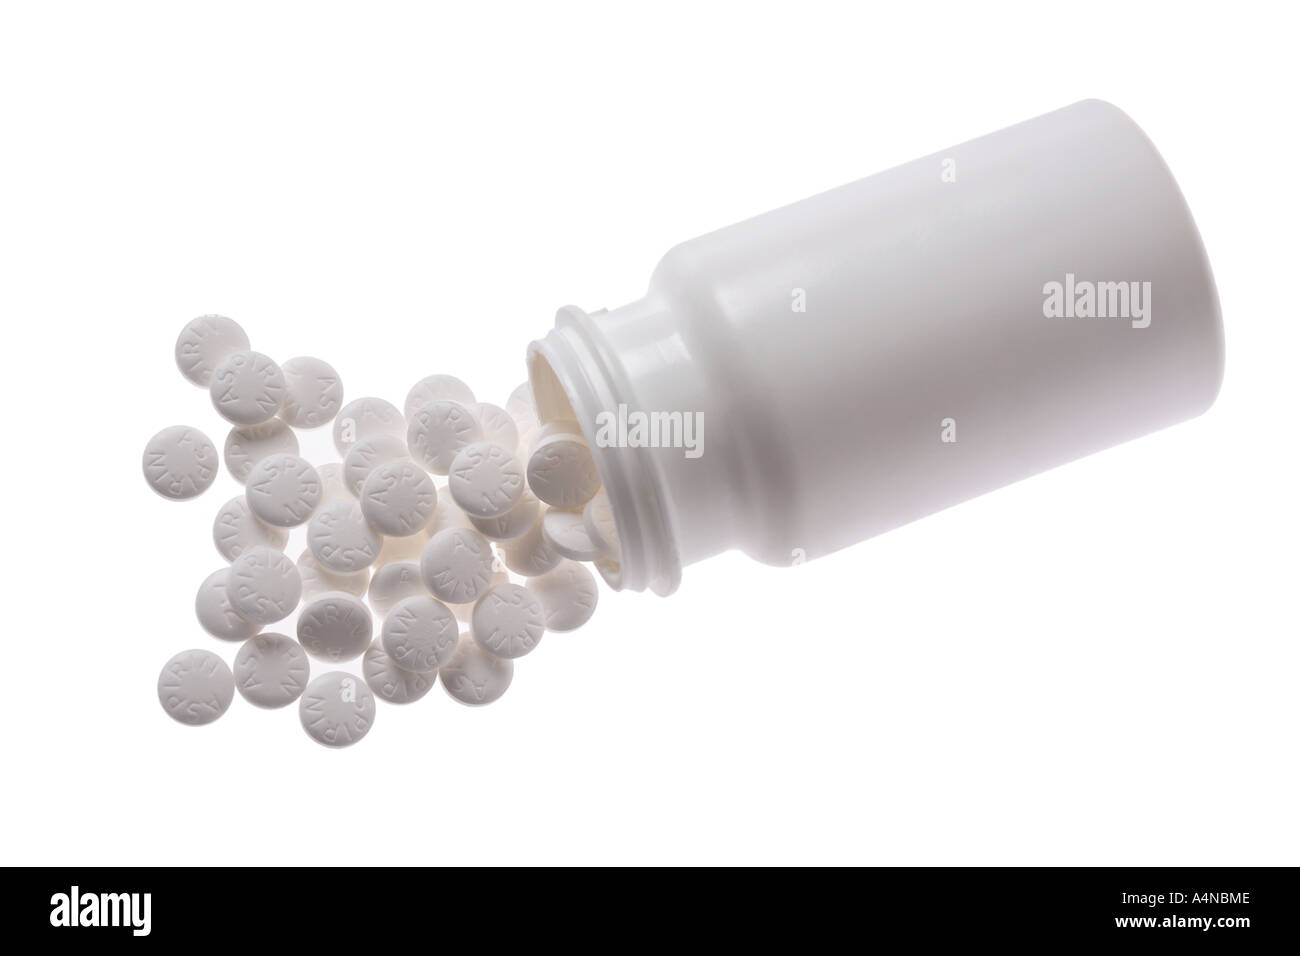 Aspirin bottle with aspirin spilling out Stock Photo